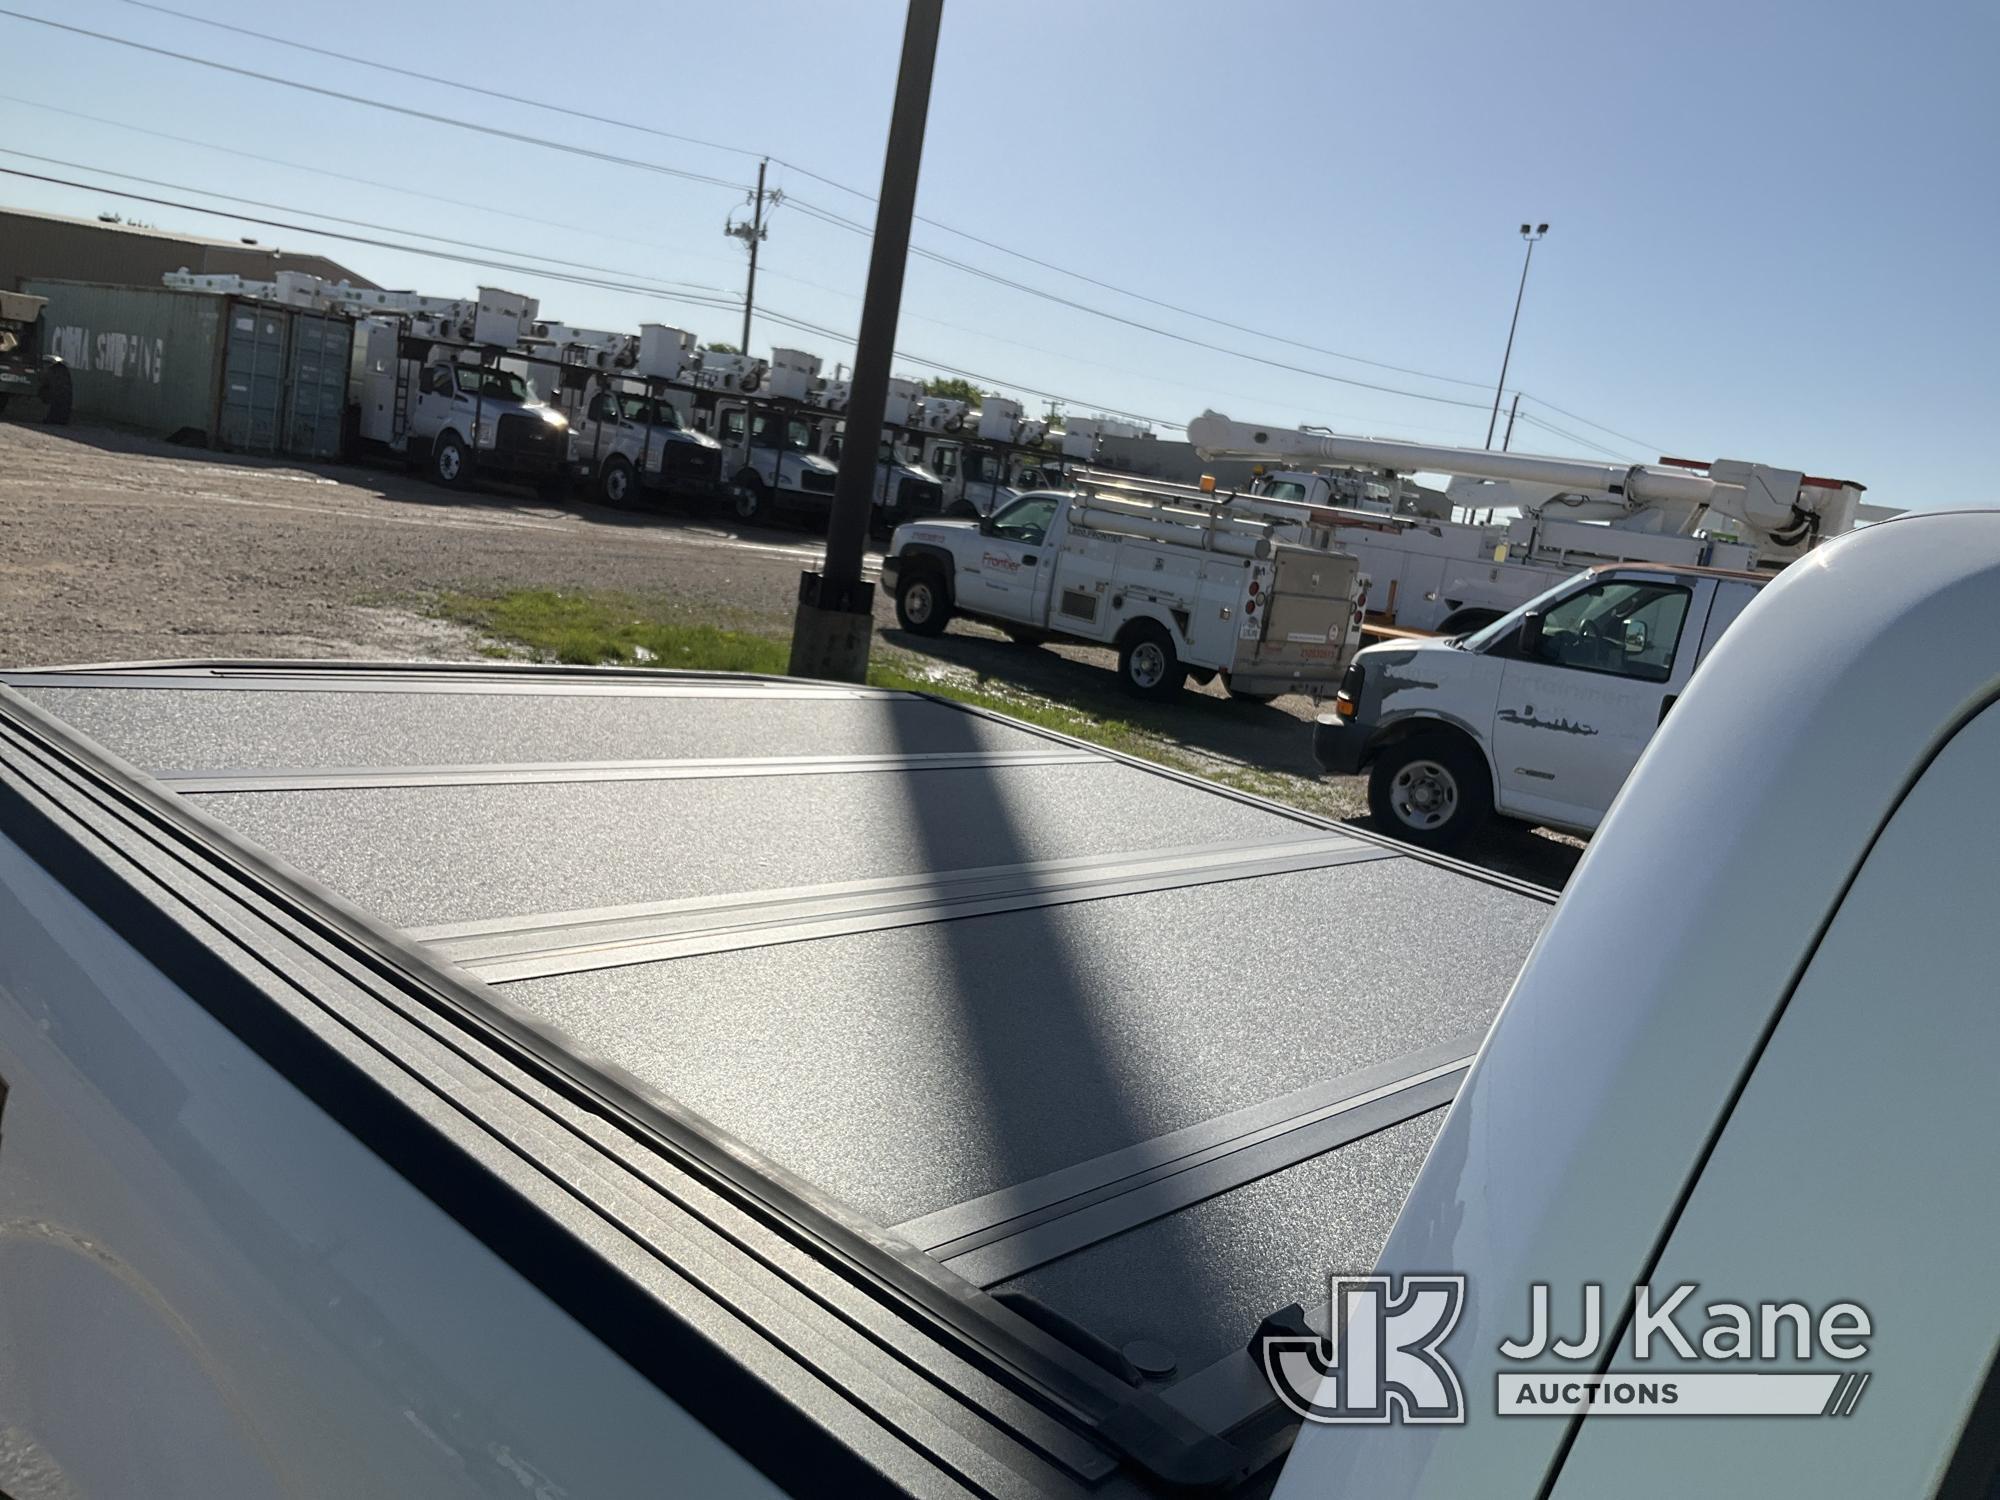 (Waxahachie, TX) 2018 Ford F150 4x4 Crew-Cab Pickup Truck Has Key, Starts, Wrecked